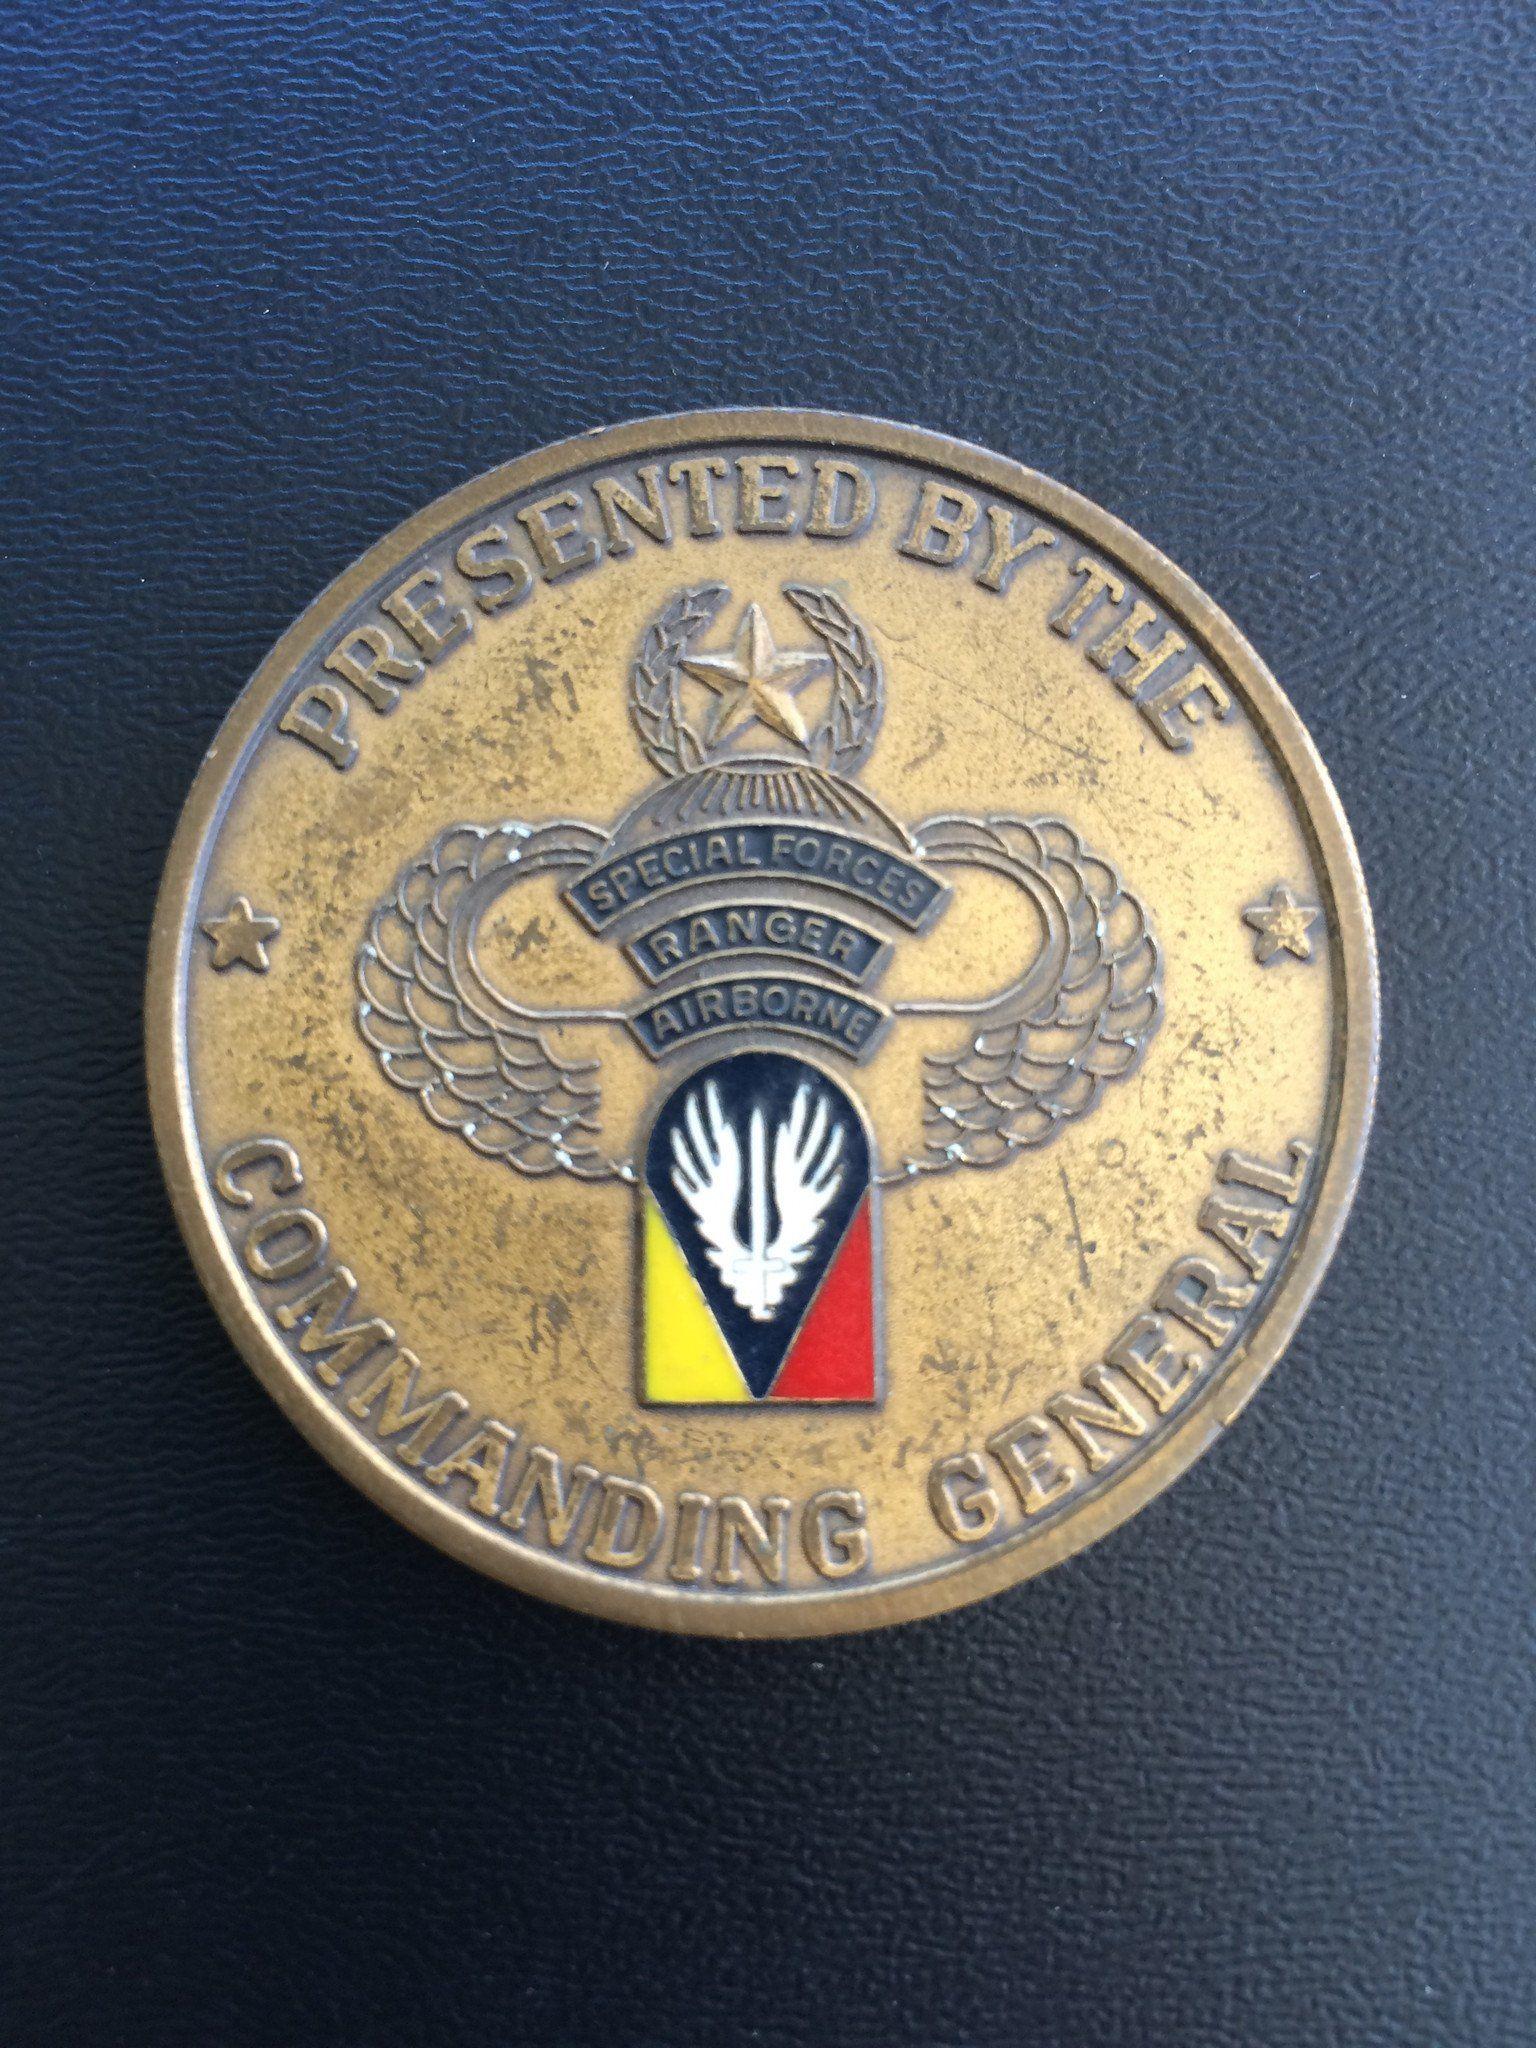 JRTC Logo - JRTC and Fort Polk Commanding General (Version 5)